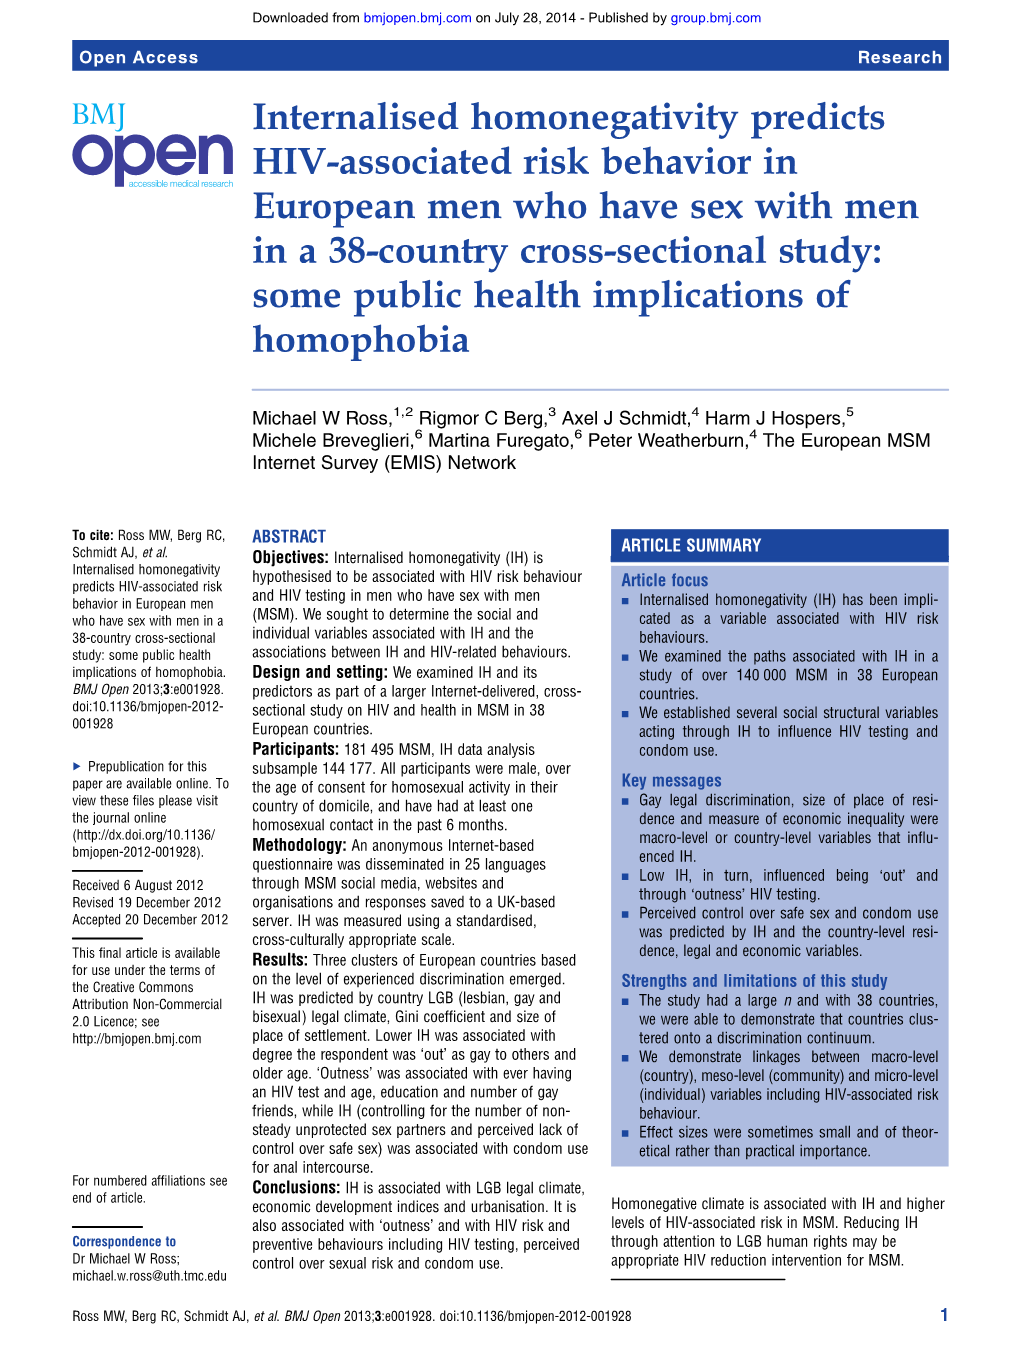 Internalised Homonegativity Predicts HIV-Associated Risk Behavior